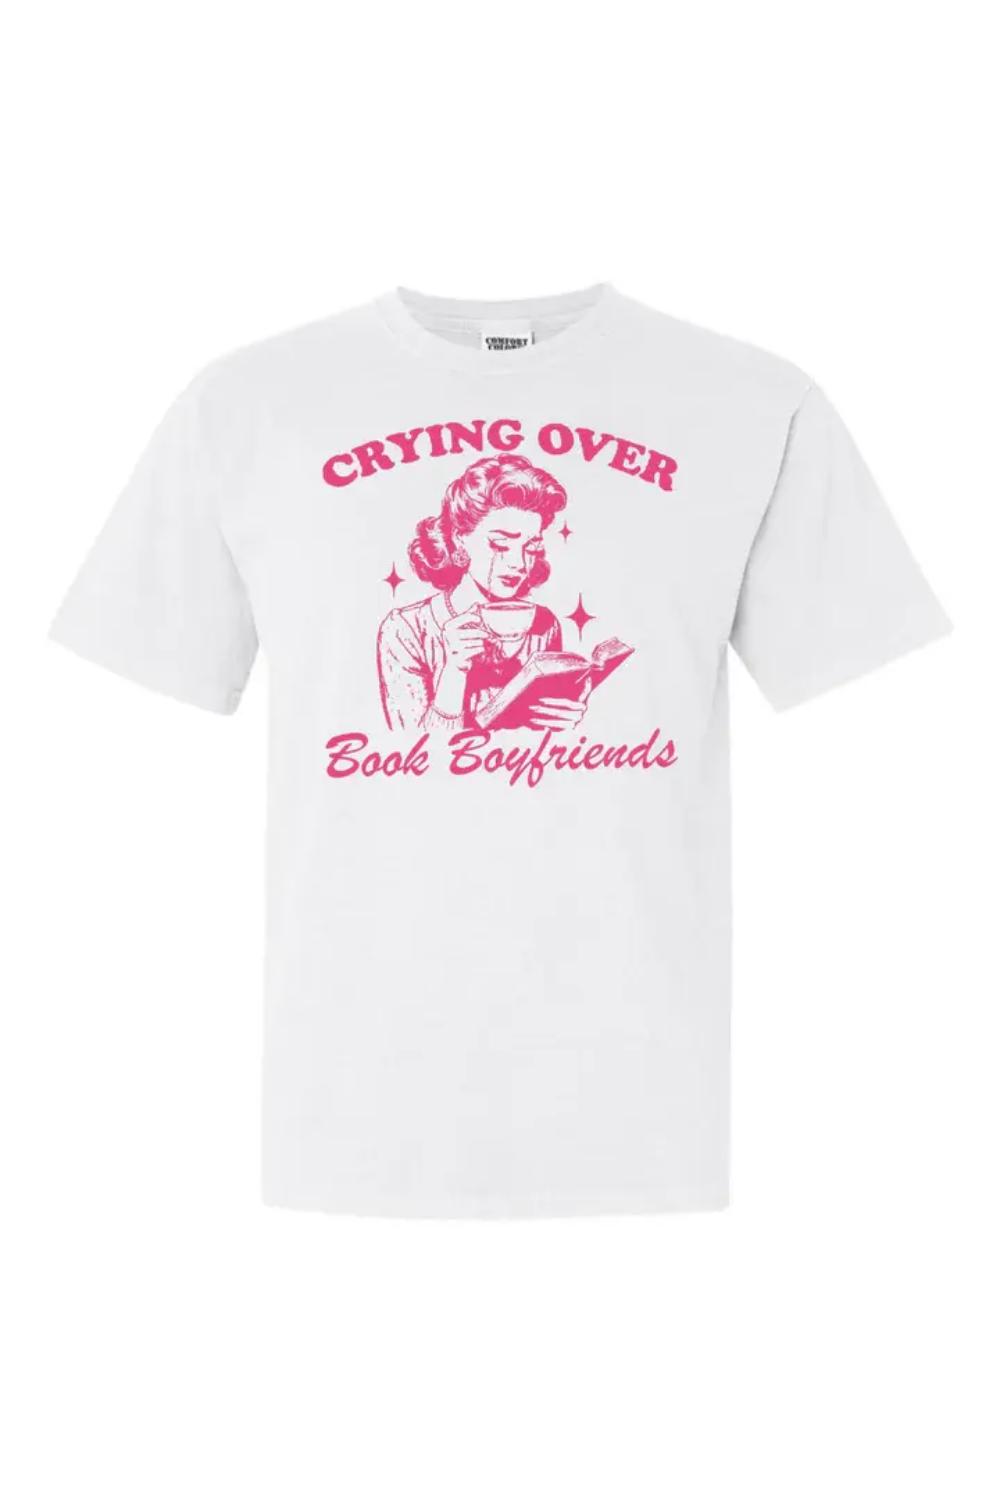 'Crying Over Book Boyfriends' T-Shirt - Mindy Mae's Marketcomfy cute hoodies